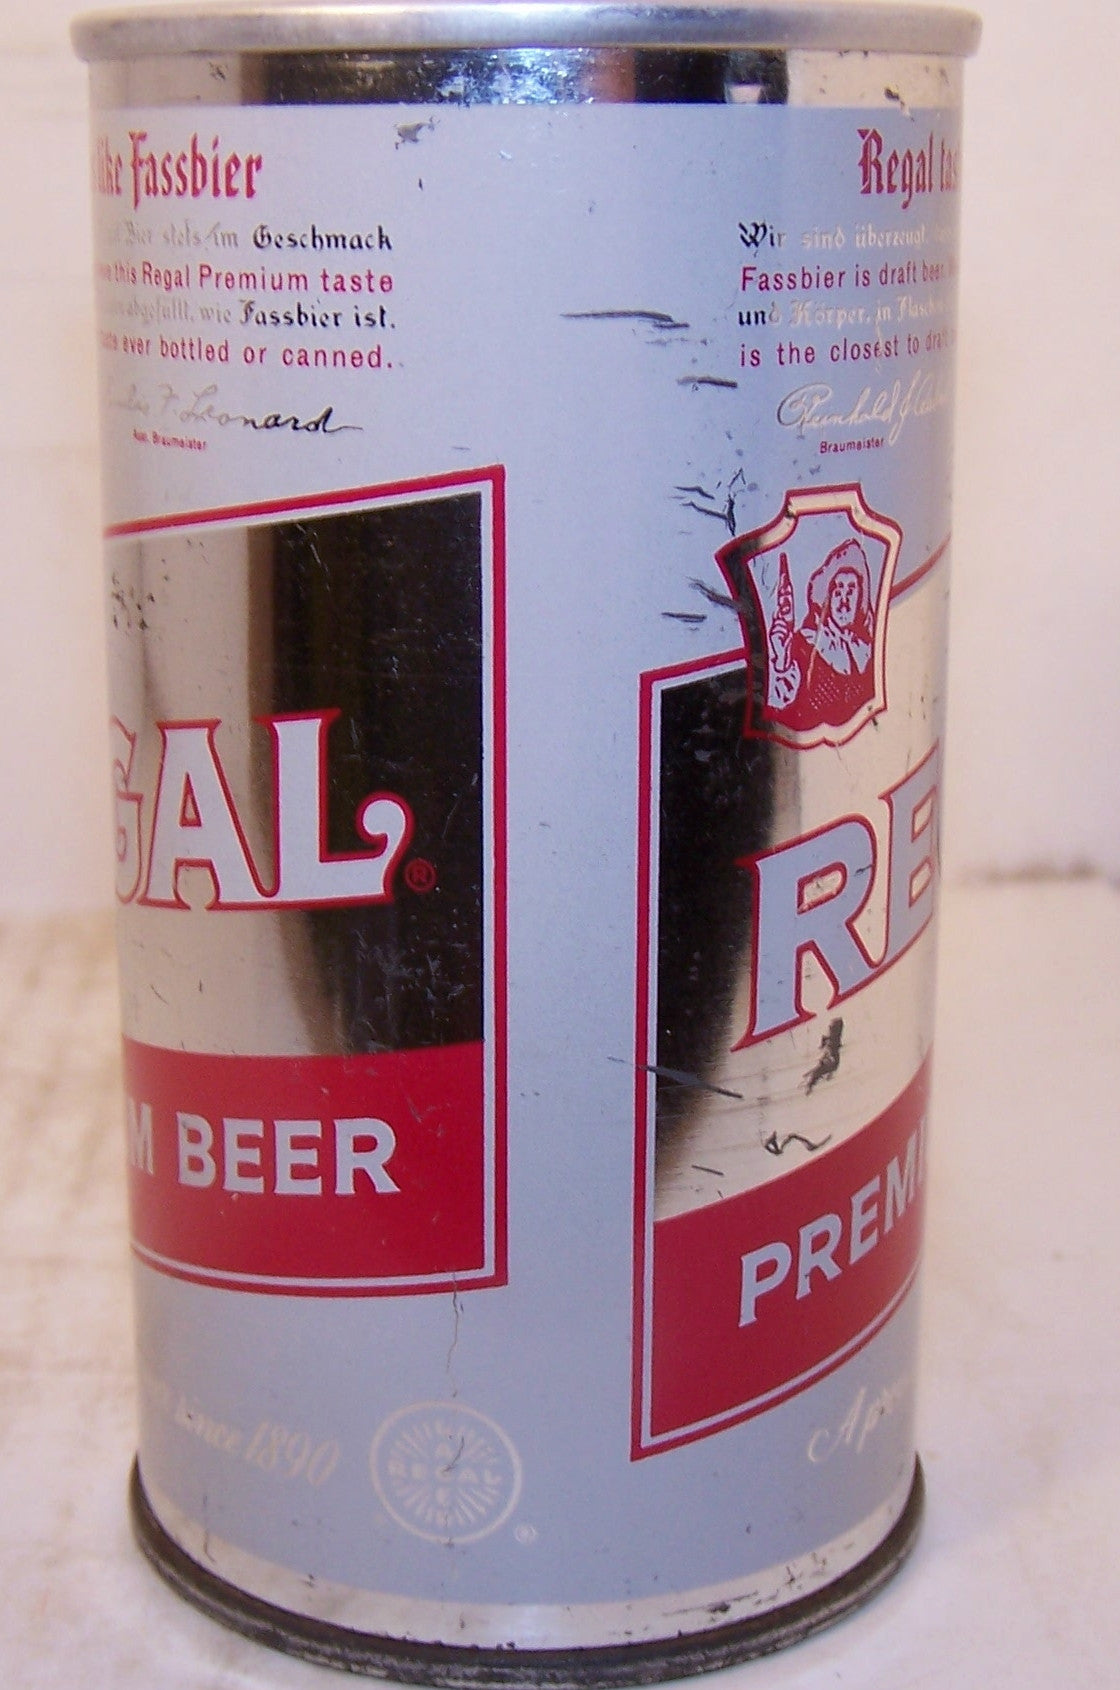 Regal Premium beer, USBC 113-19, original, grade 1- Sold on 08/26/17